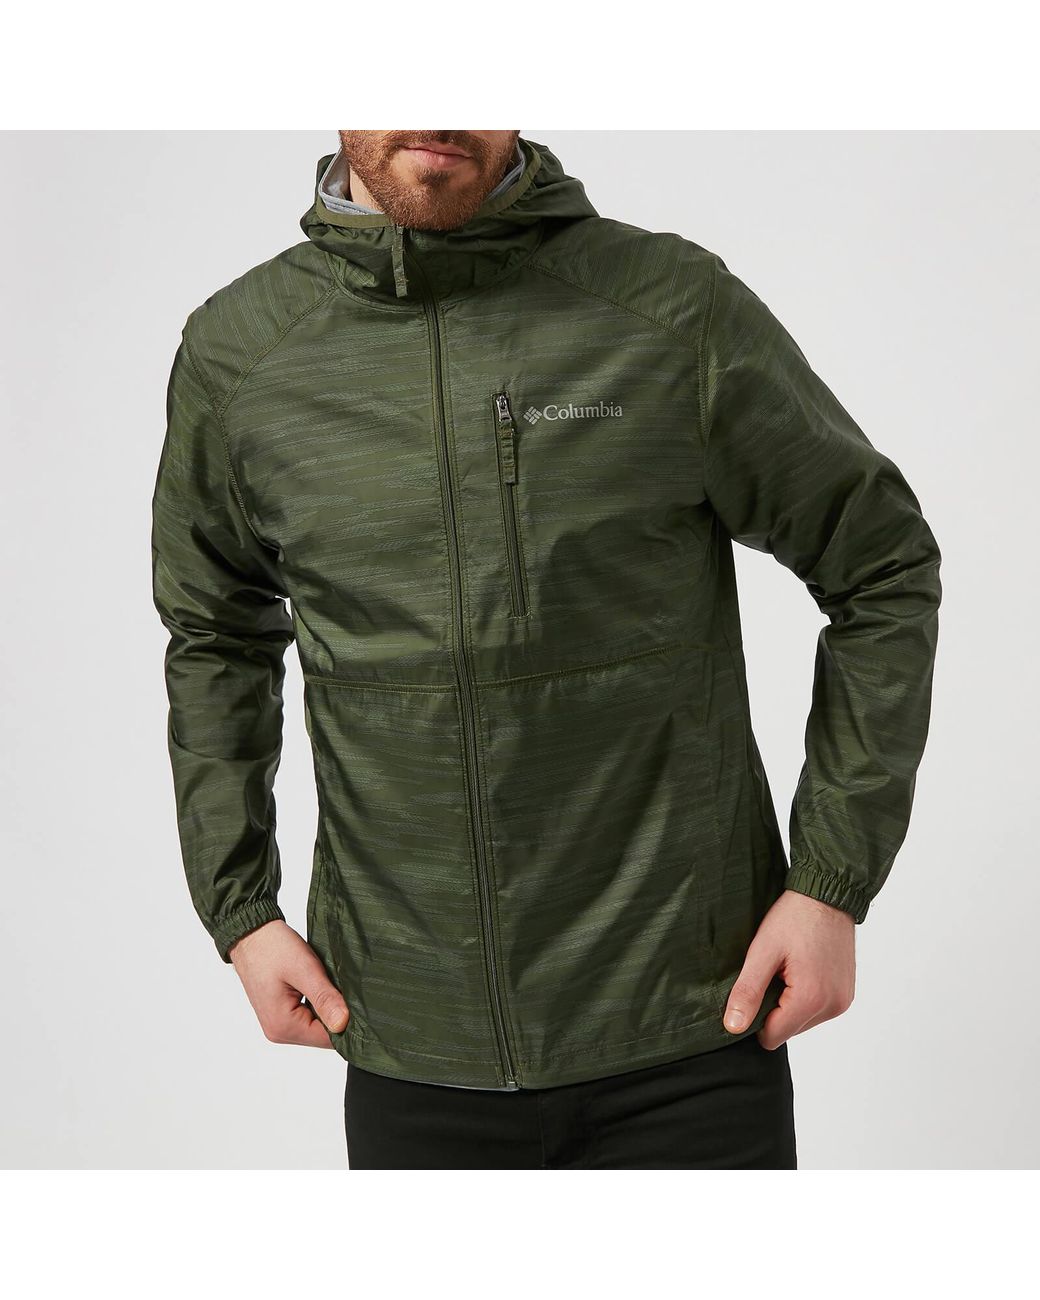 Green | Flash Lyst Columbia Windbreaker Jacket in Forward Men for Print